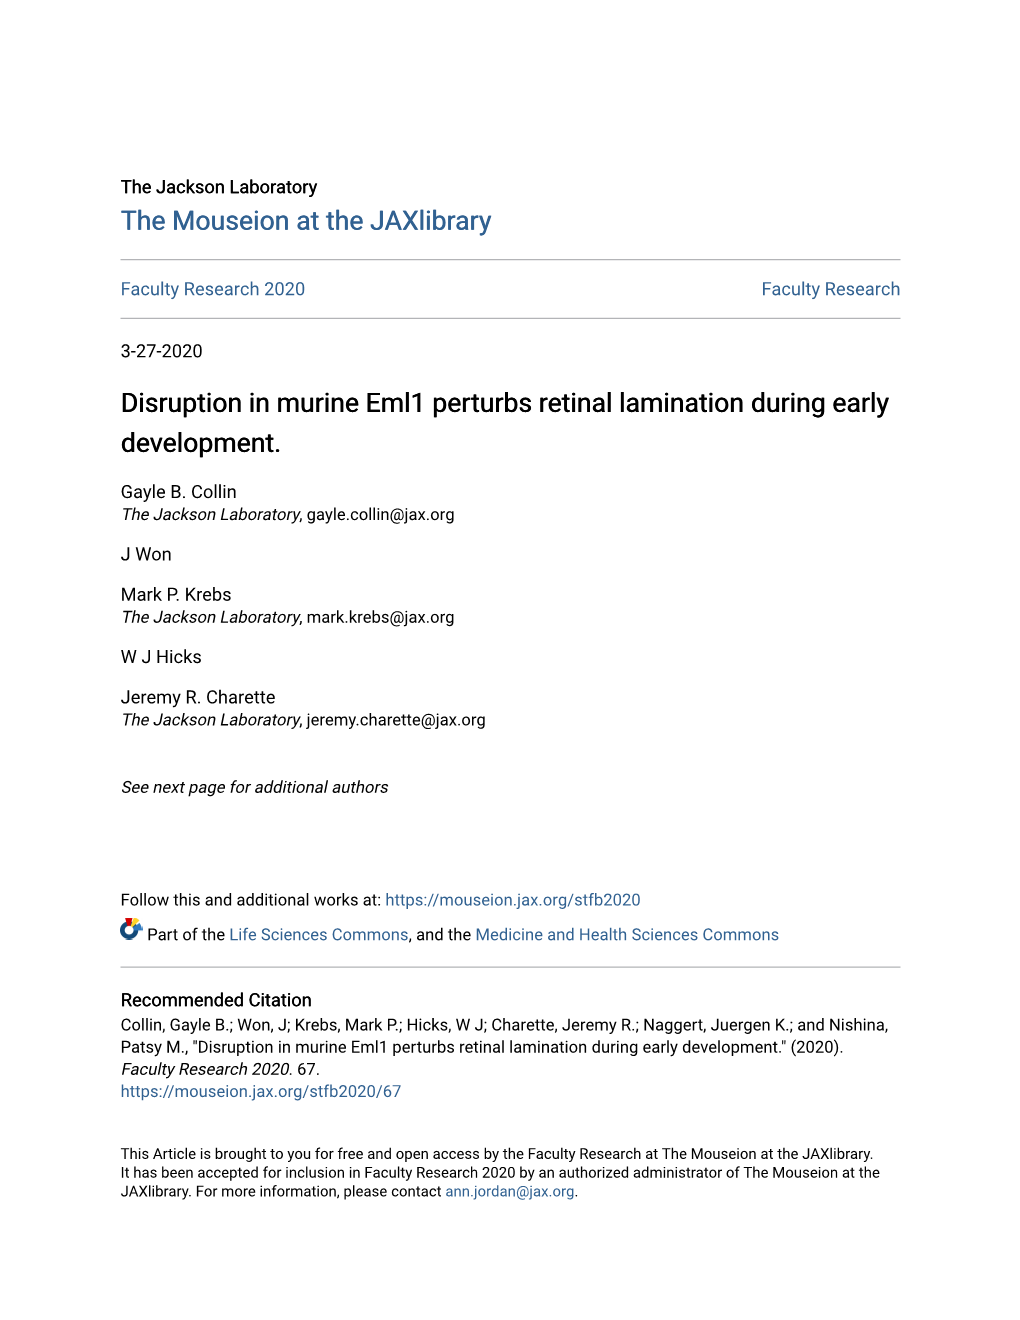 Disruption in Murine Eml1 Perturbs Retinal Lamination During Early Development